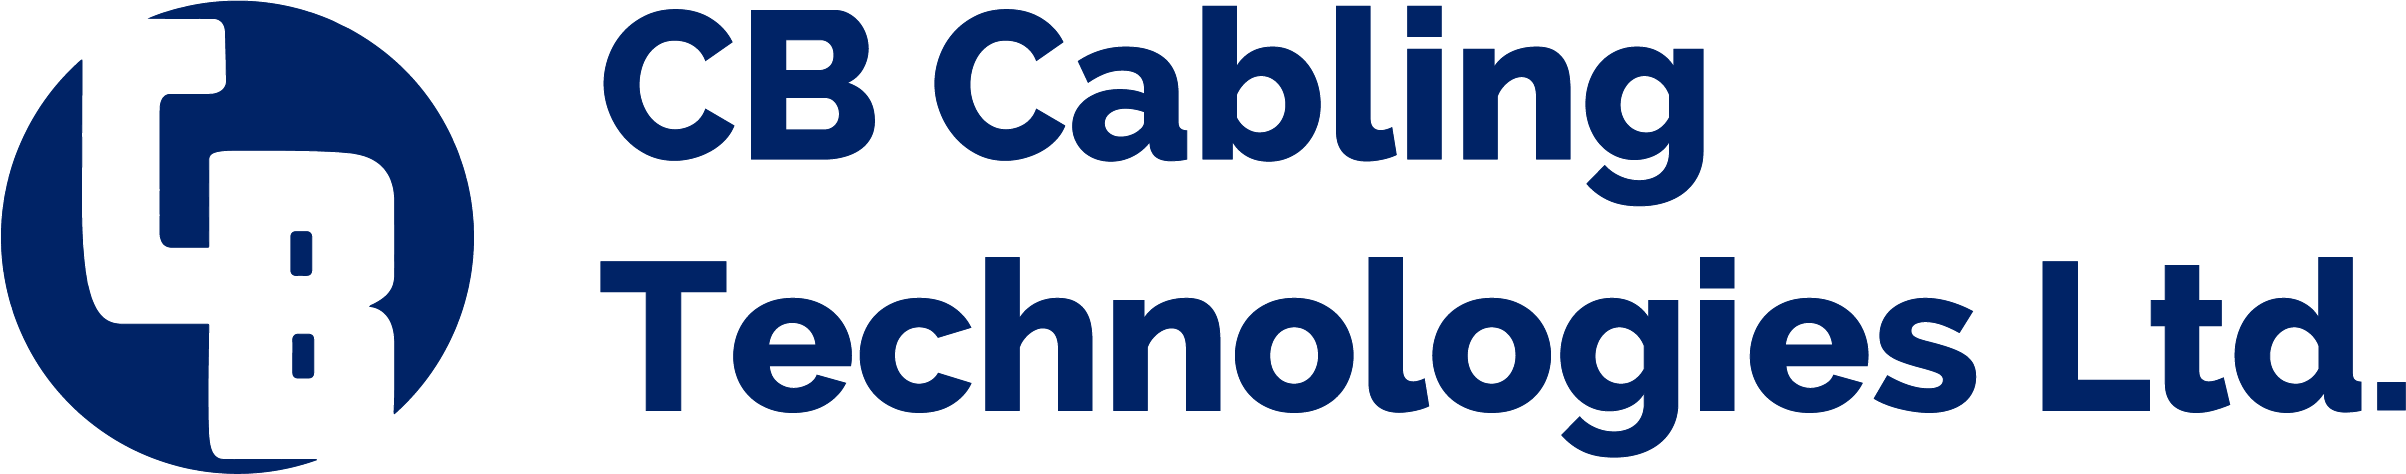 CB Cabling Technologies Ltd